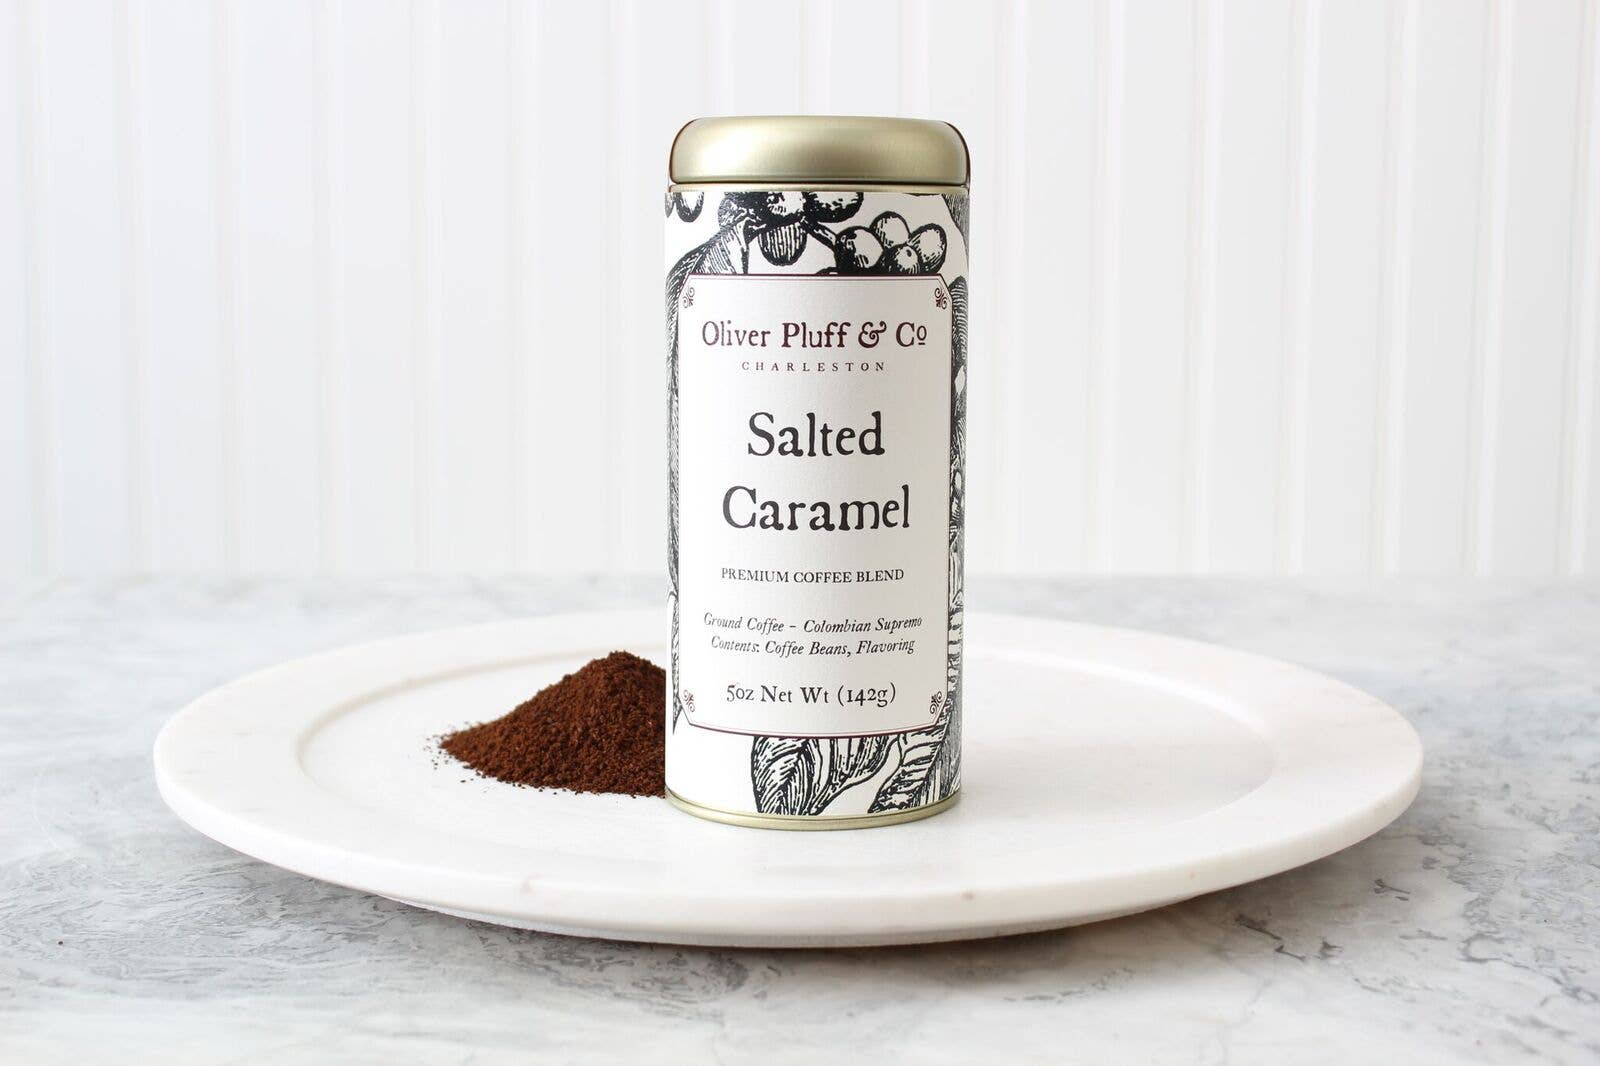 Salted Caramel Ground Coffee - Signature Coffee Tin